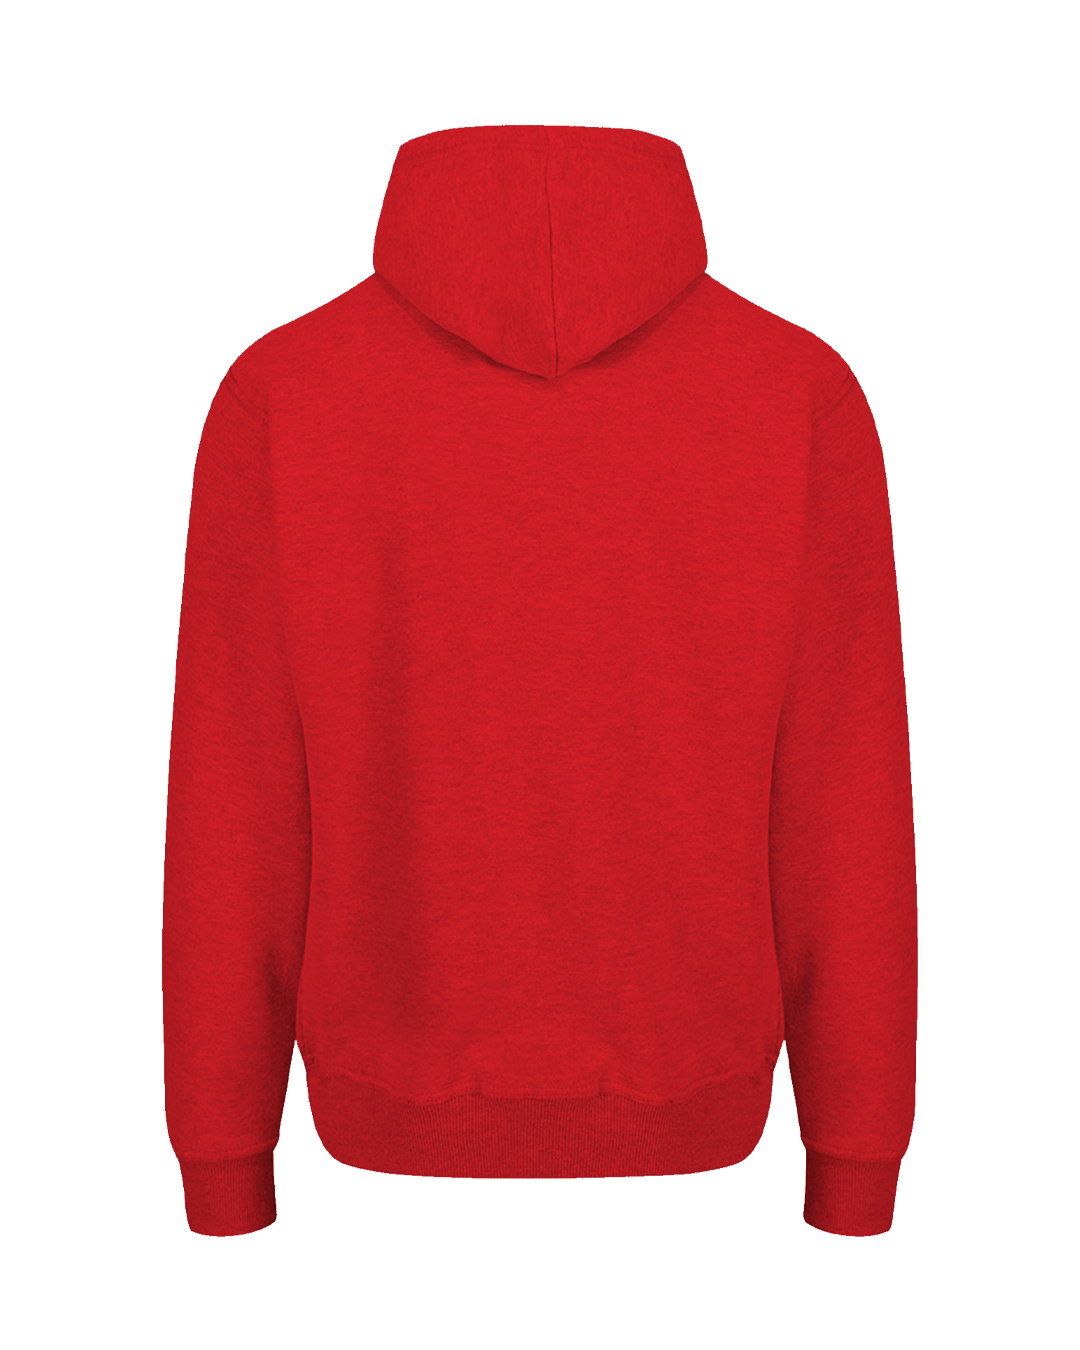 Shop Women's Red Winter Hoodie Sweatshirt-Back